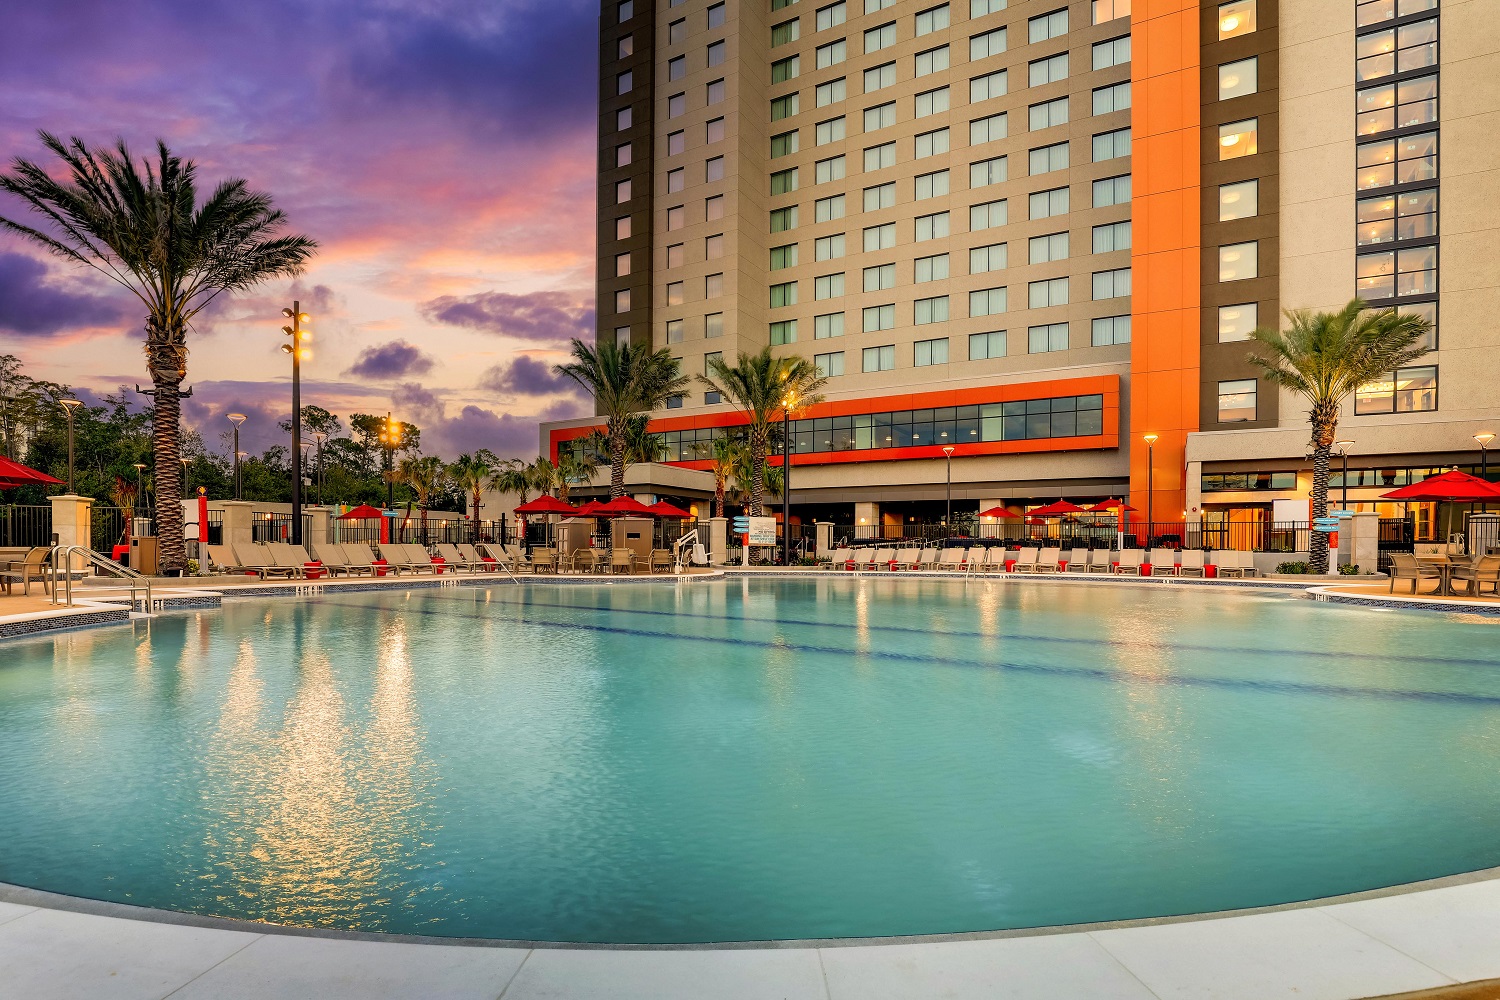 Orlando Hotel Suites, Theme Park Tickets & Shuttle